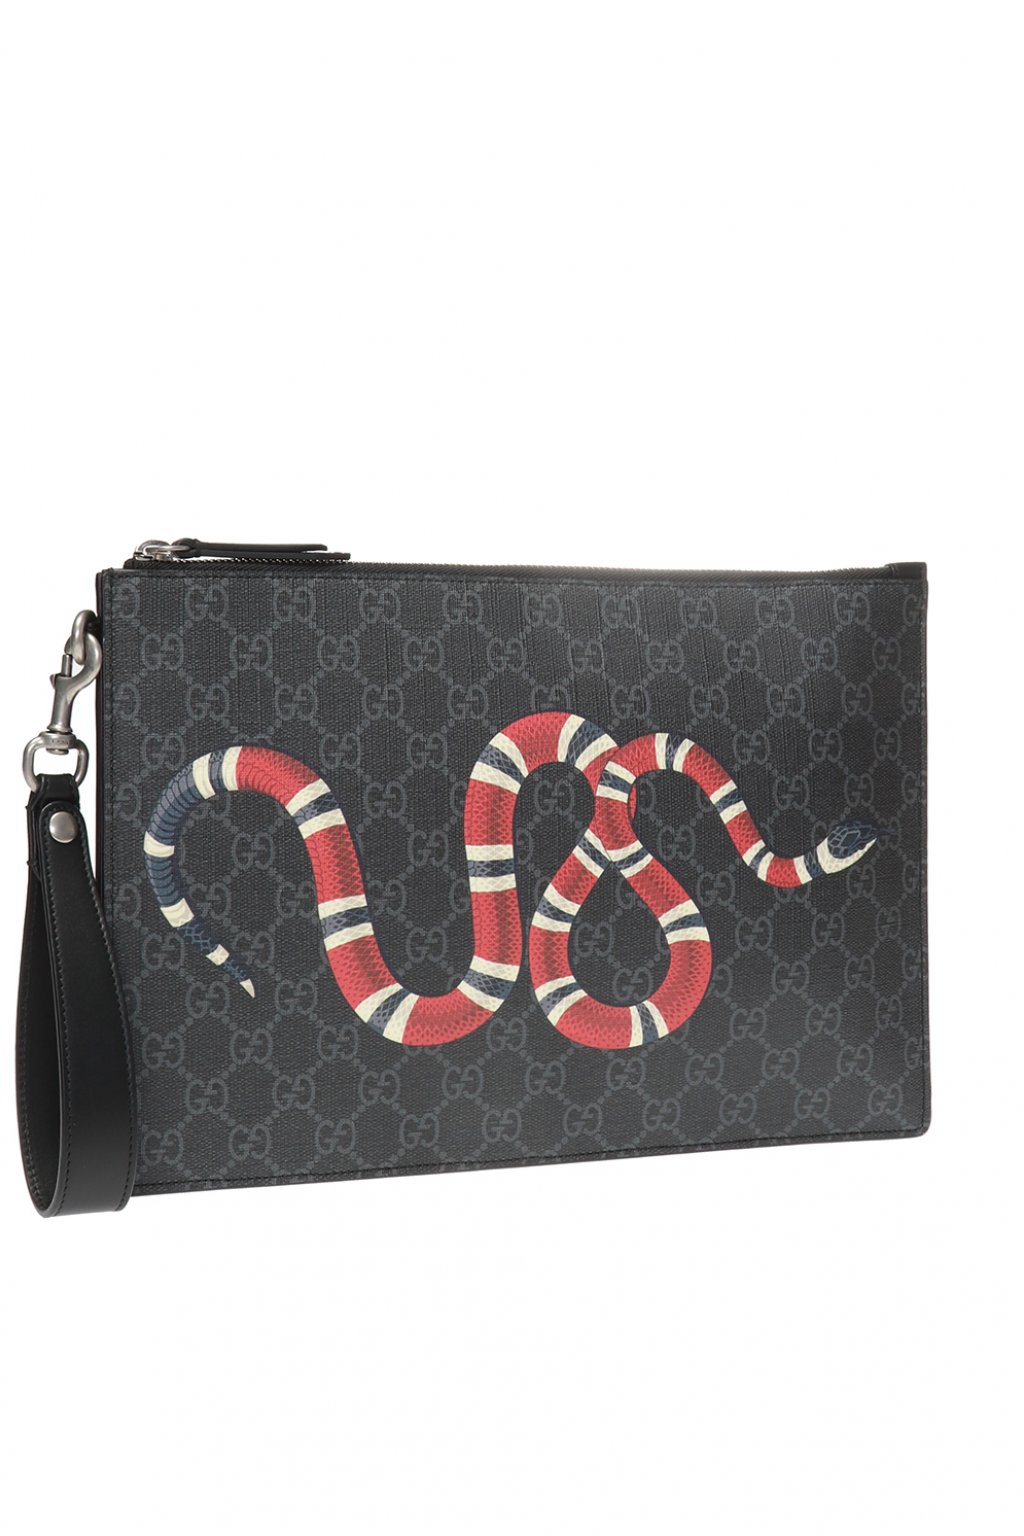 Gucci Strap Up All Your Essentials in item gucci's Supreme Camera Bag